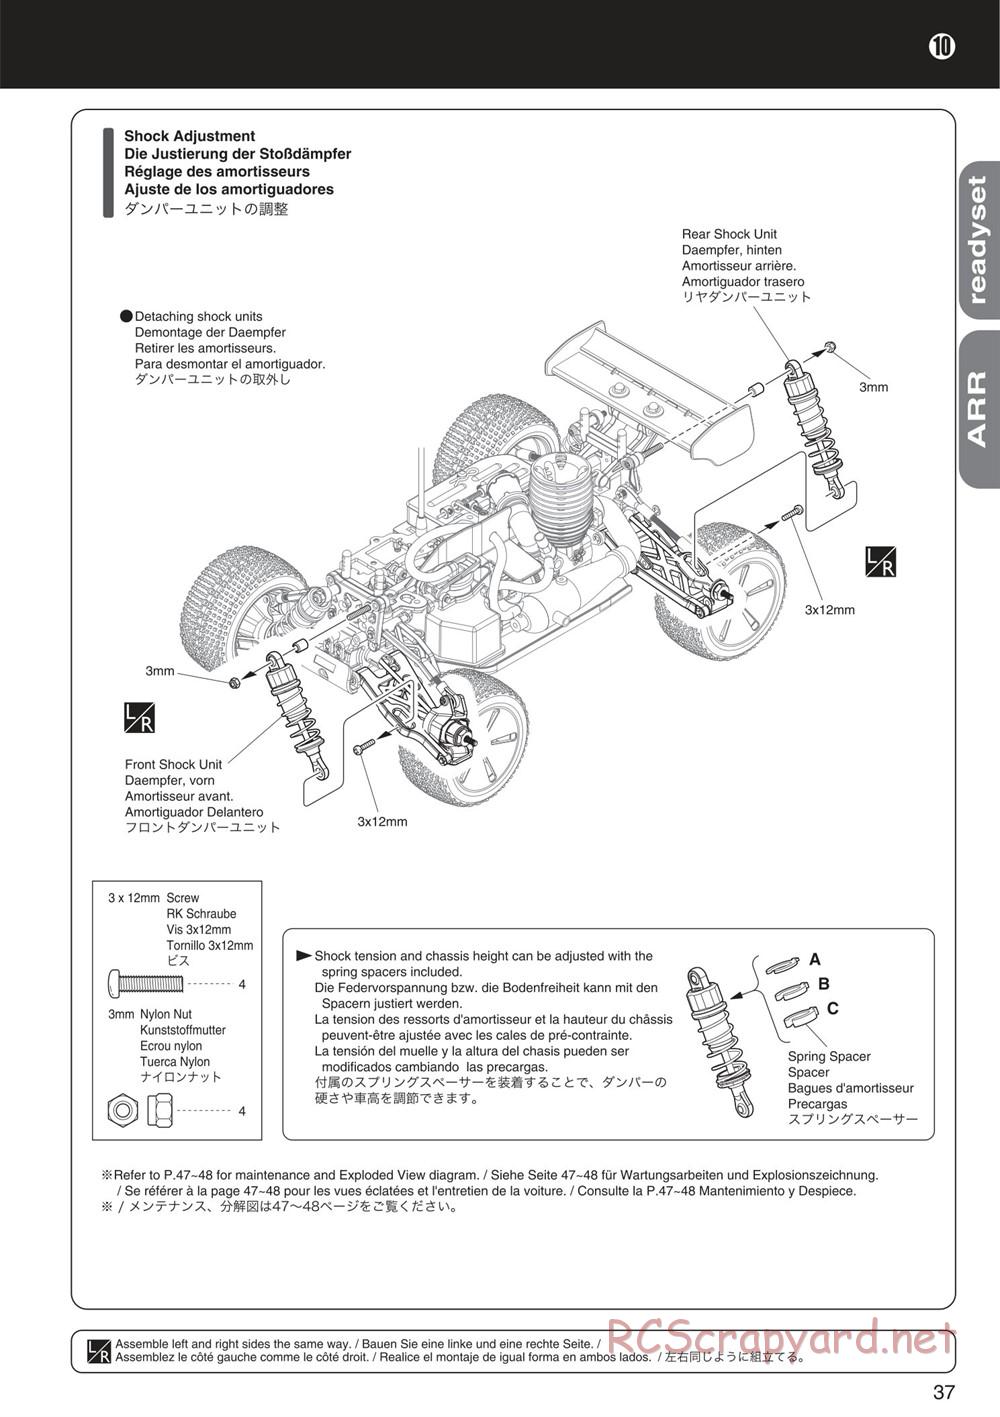 Kyosho - Mini Inferno ST 09 - Manual - Page 37